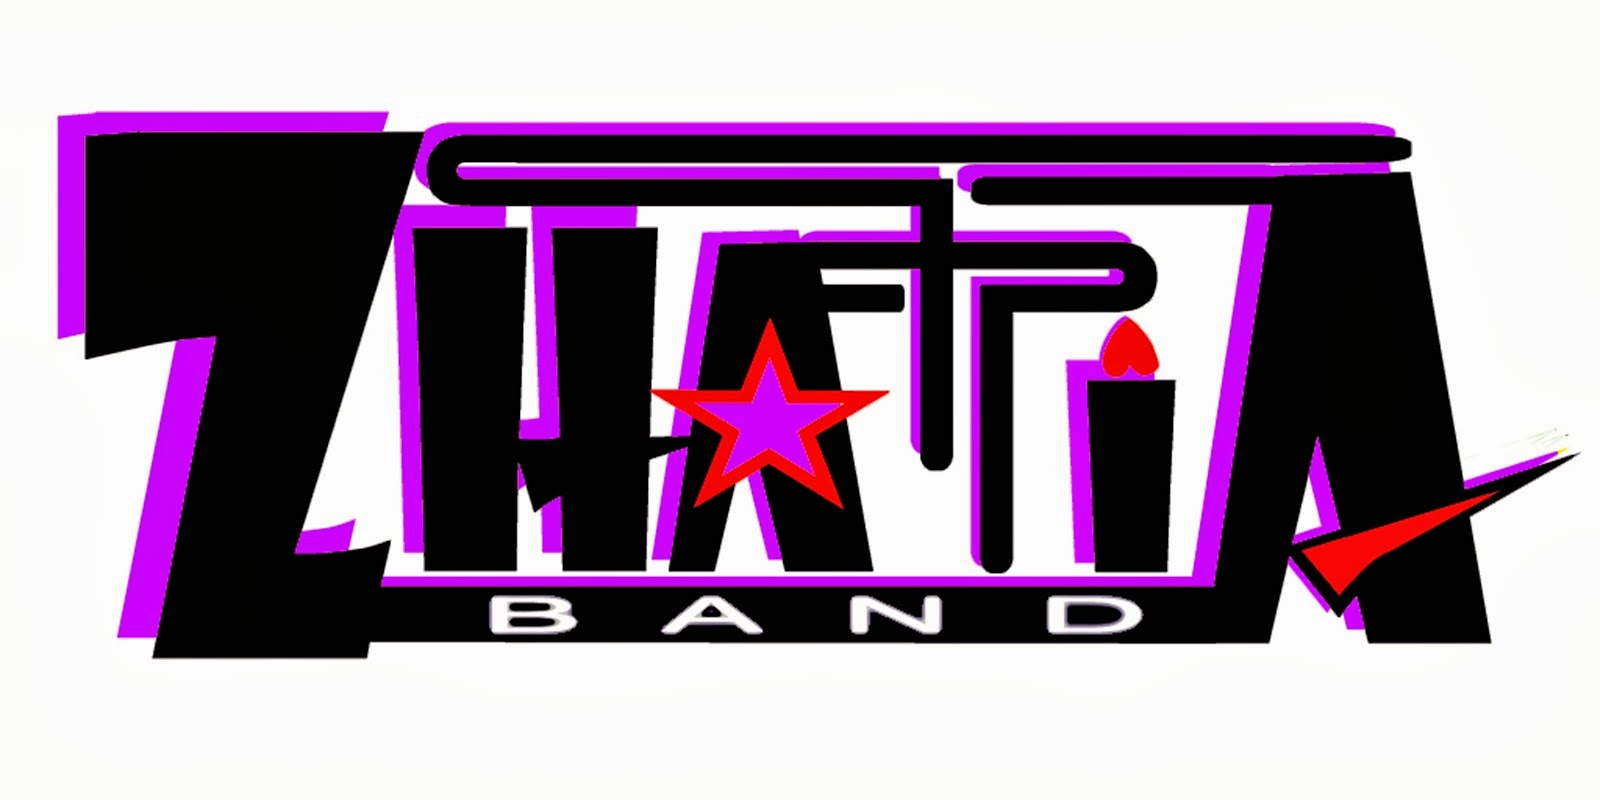 Zhattia Band